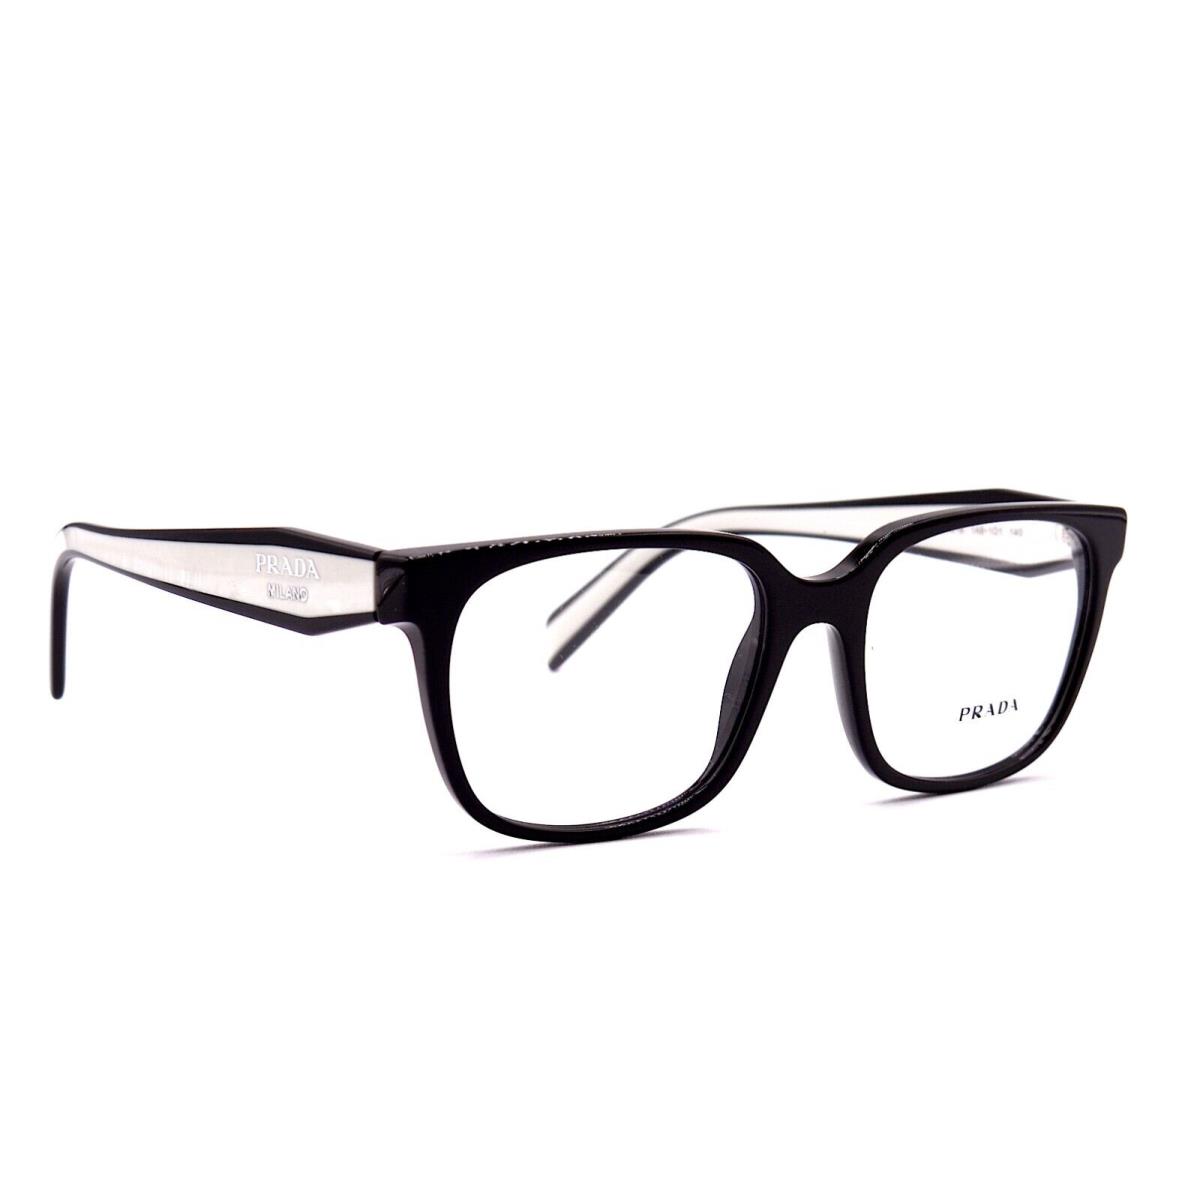 Prada eyeglasses  - Frame: Black 1